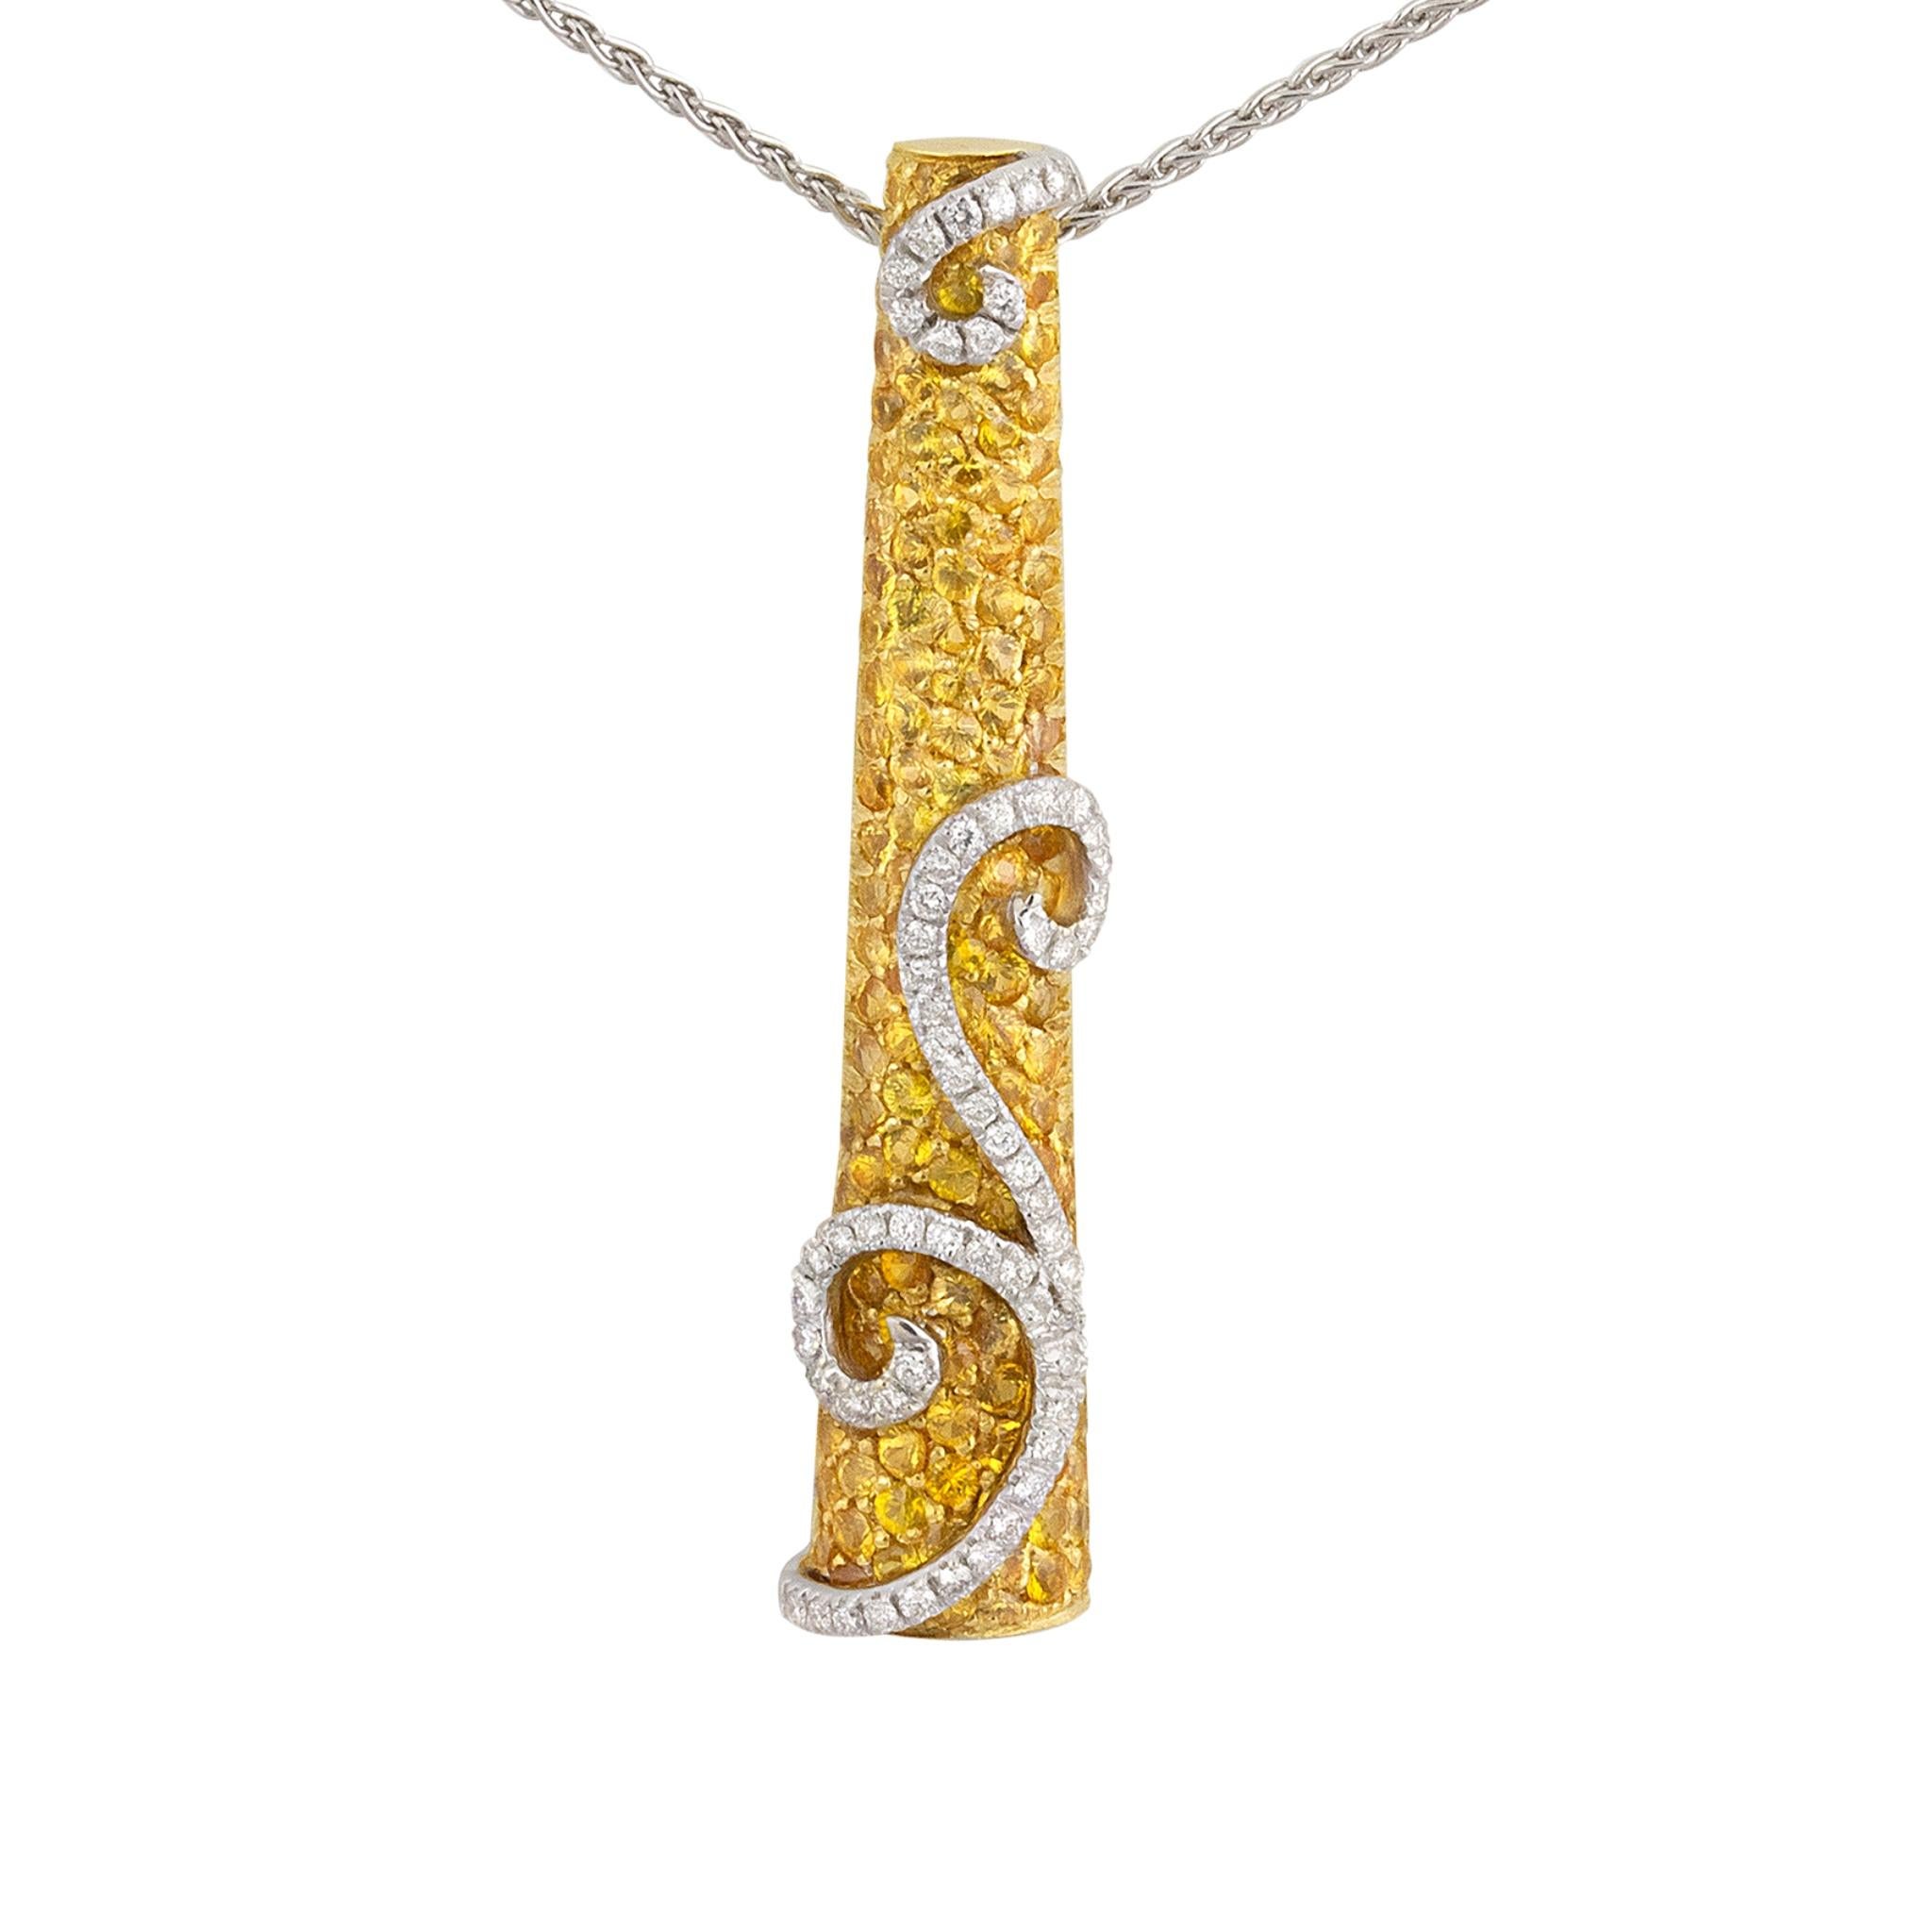 Stefan Hafner Pendant Necklace
18K White Gold
Diamonds: 0.45ctw
Sapphire: 3.83ctw
Retail price: $12,500.00
SKU: BLU01142